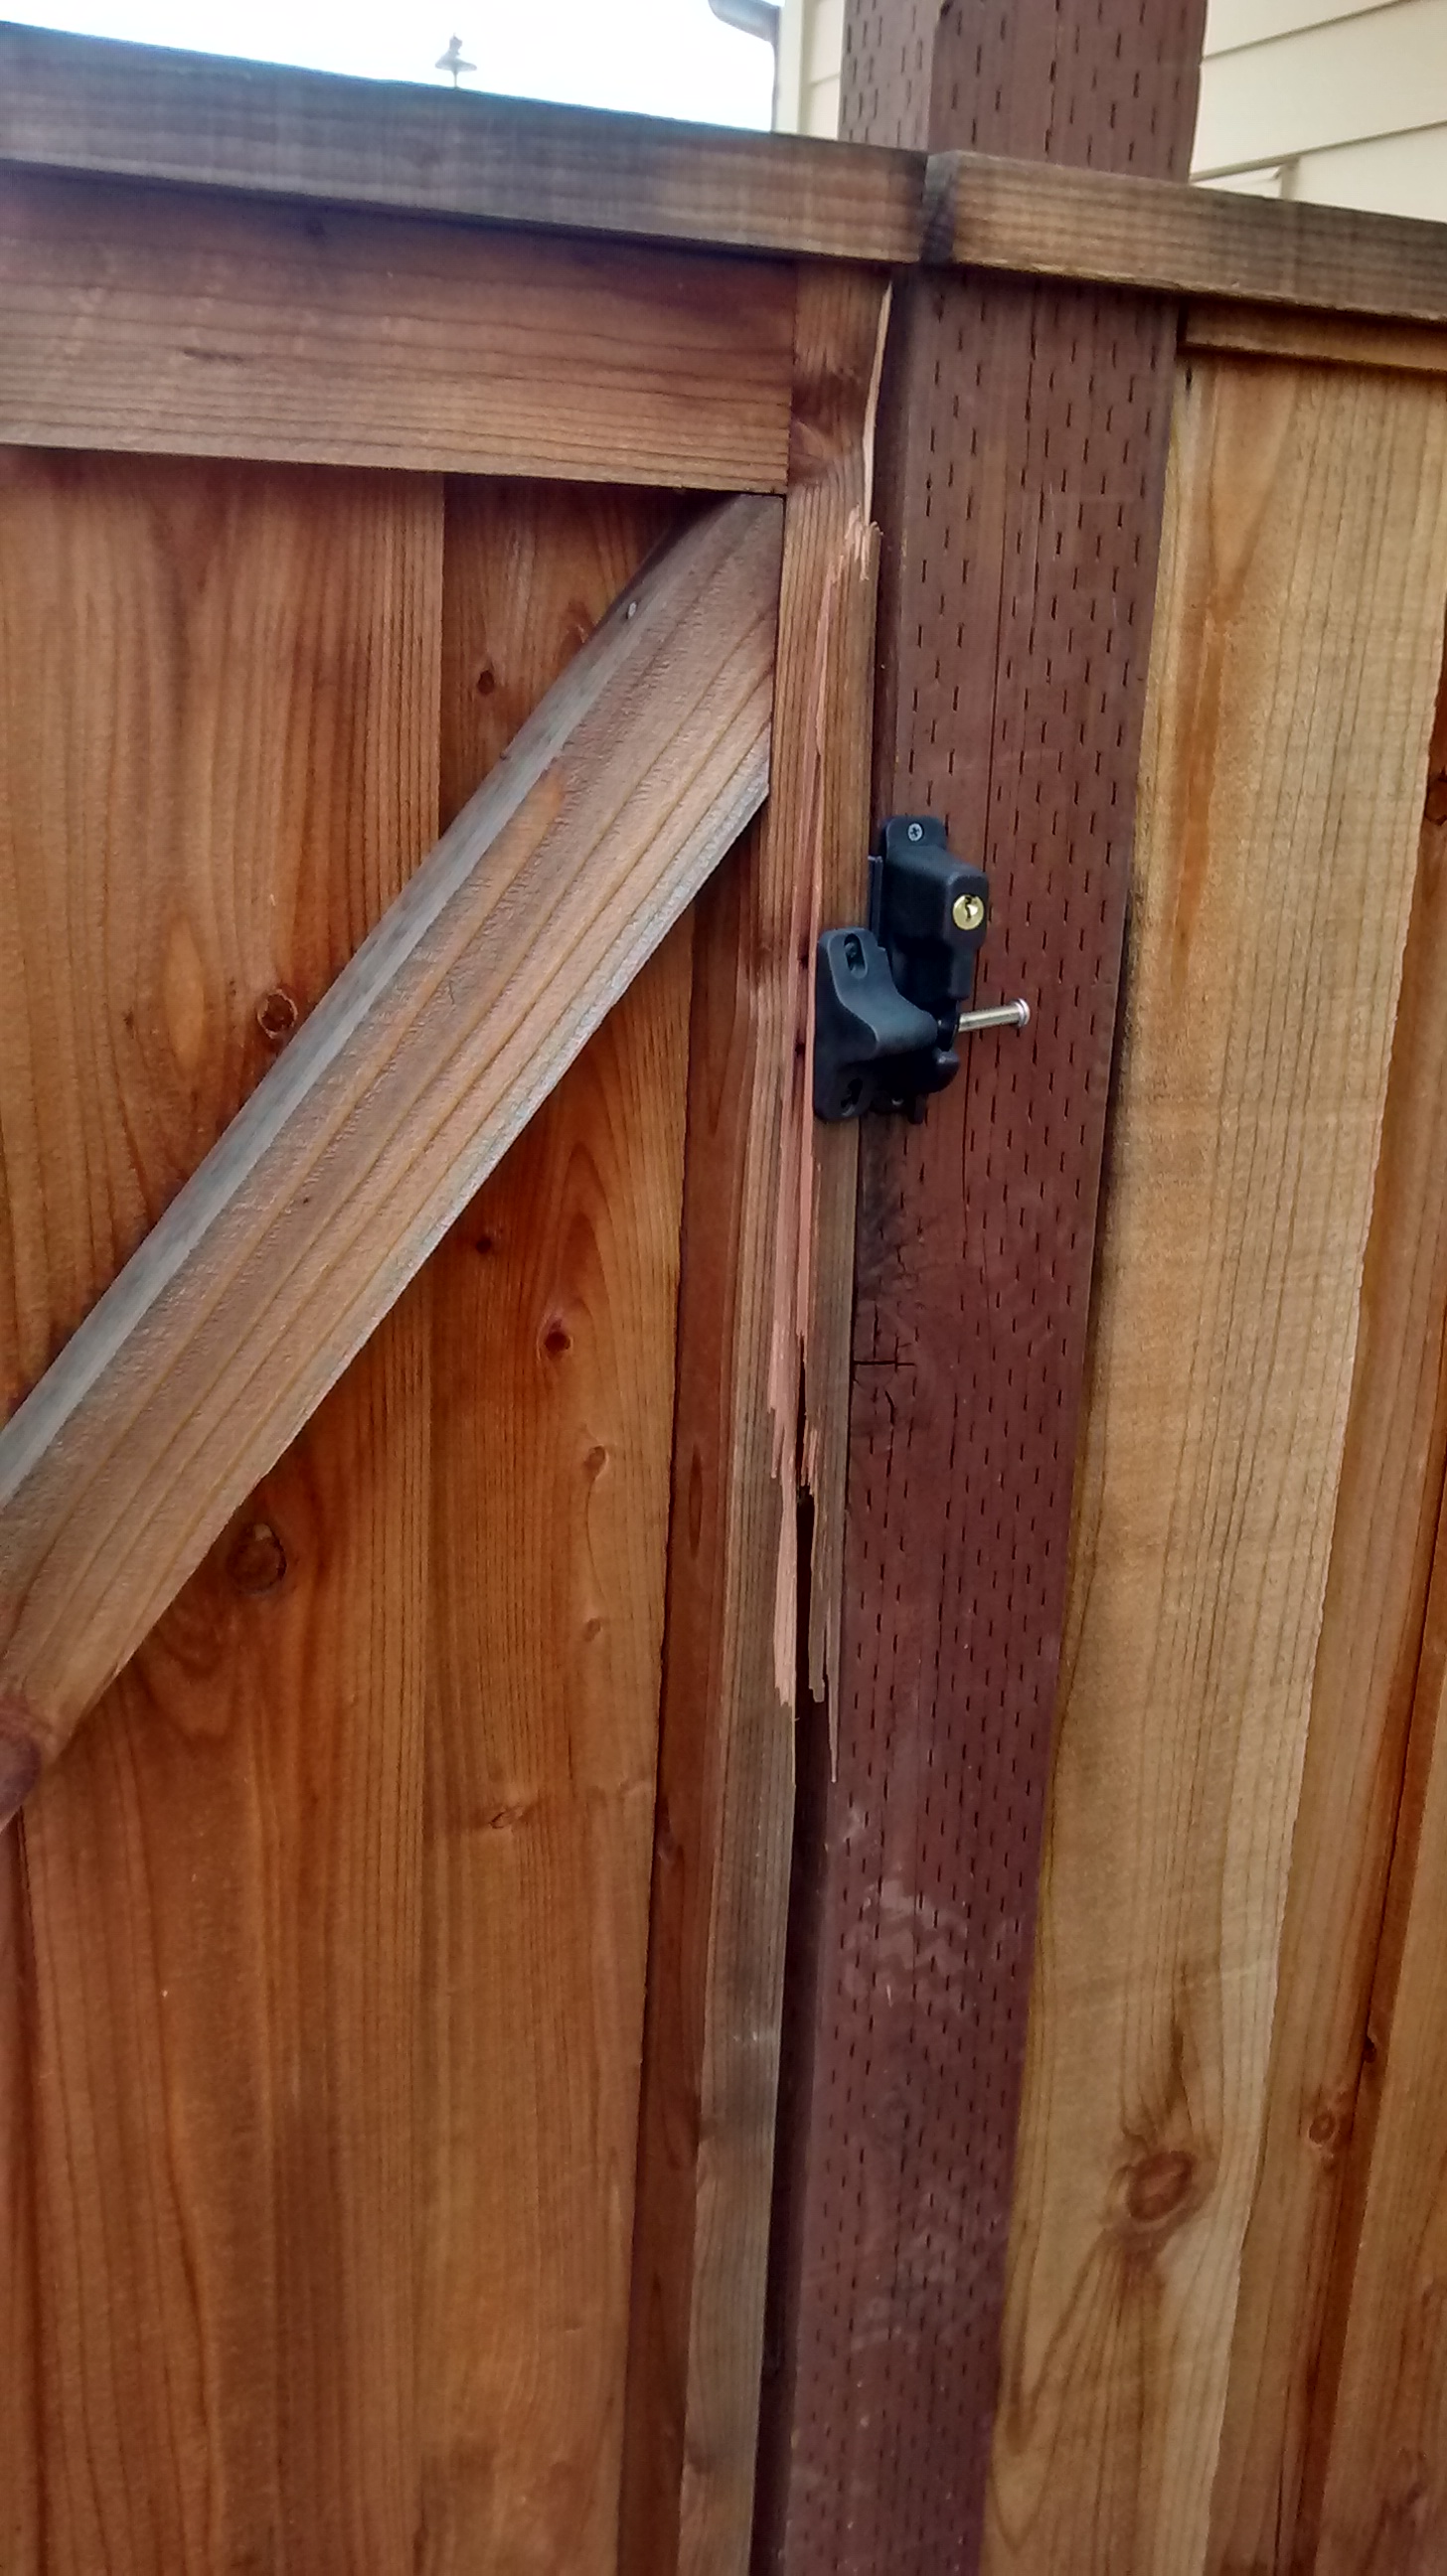 How To Repair A Crack In A Wood Door